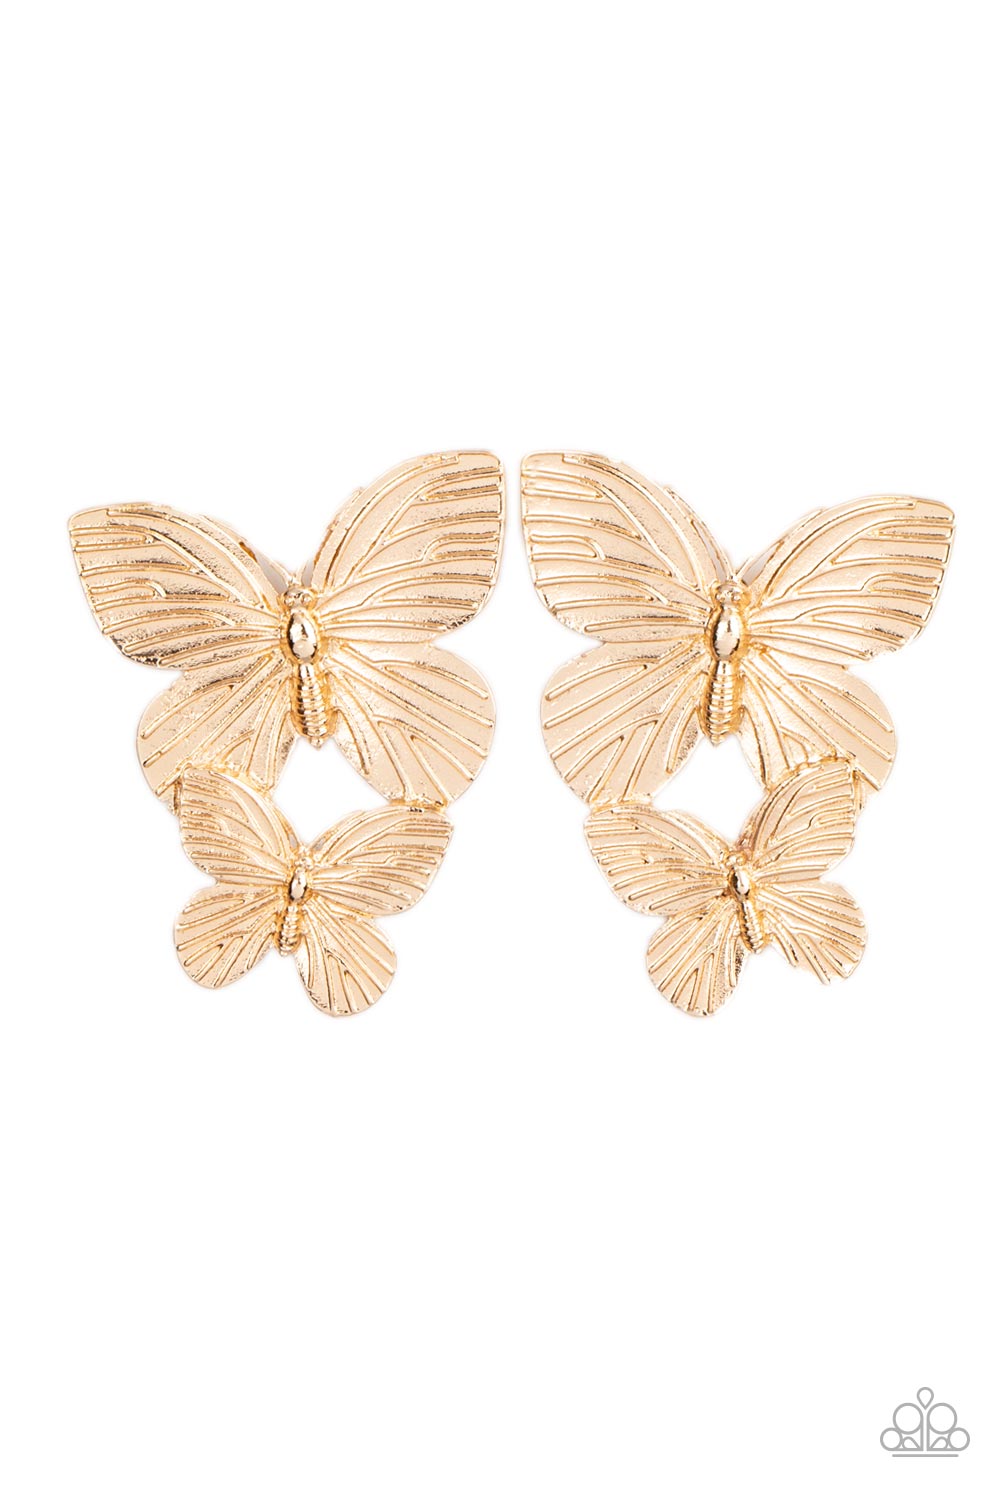 Blushing Butterflies Gold-Earrings